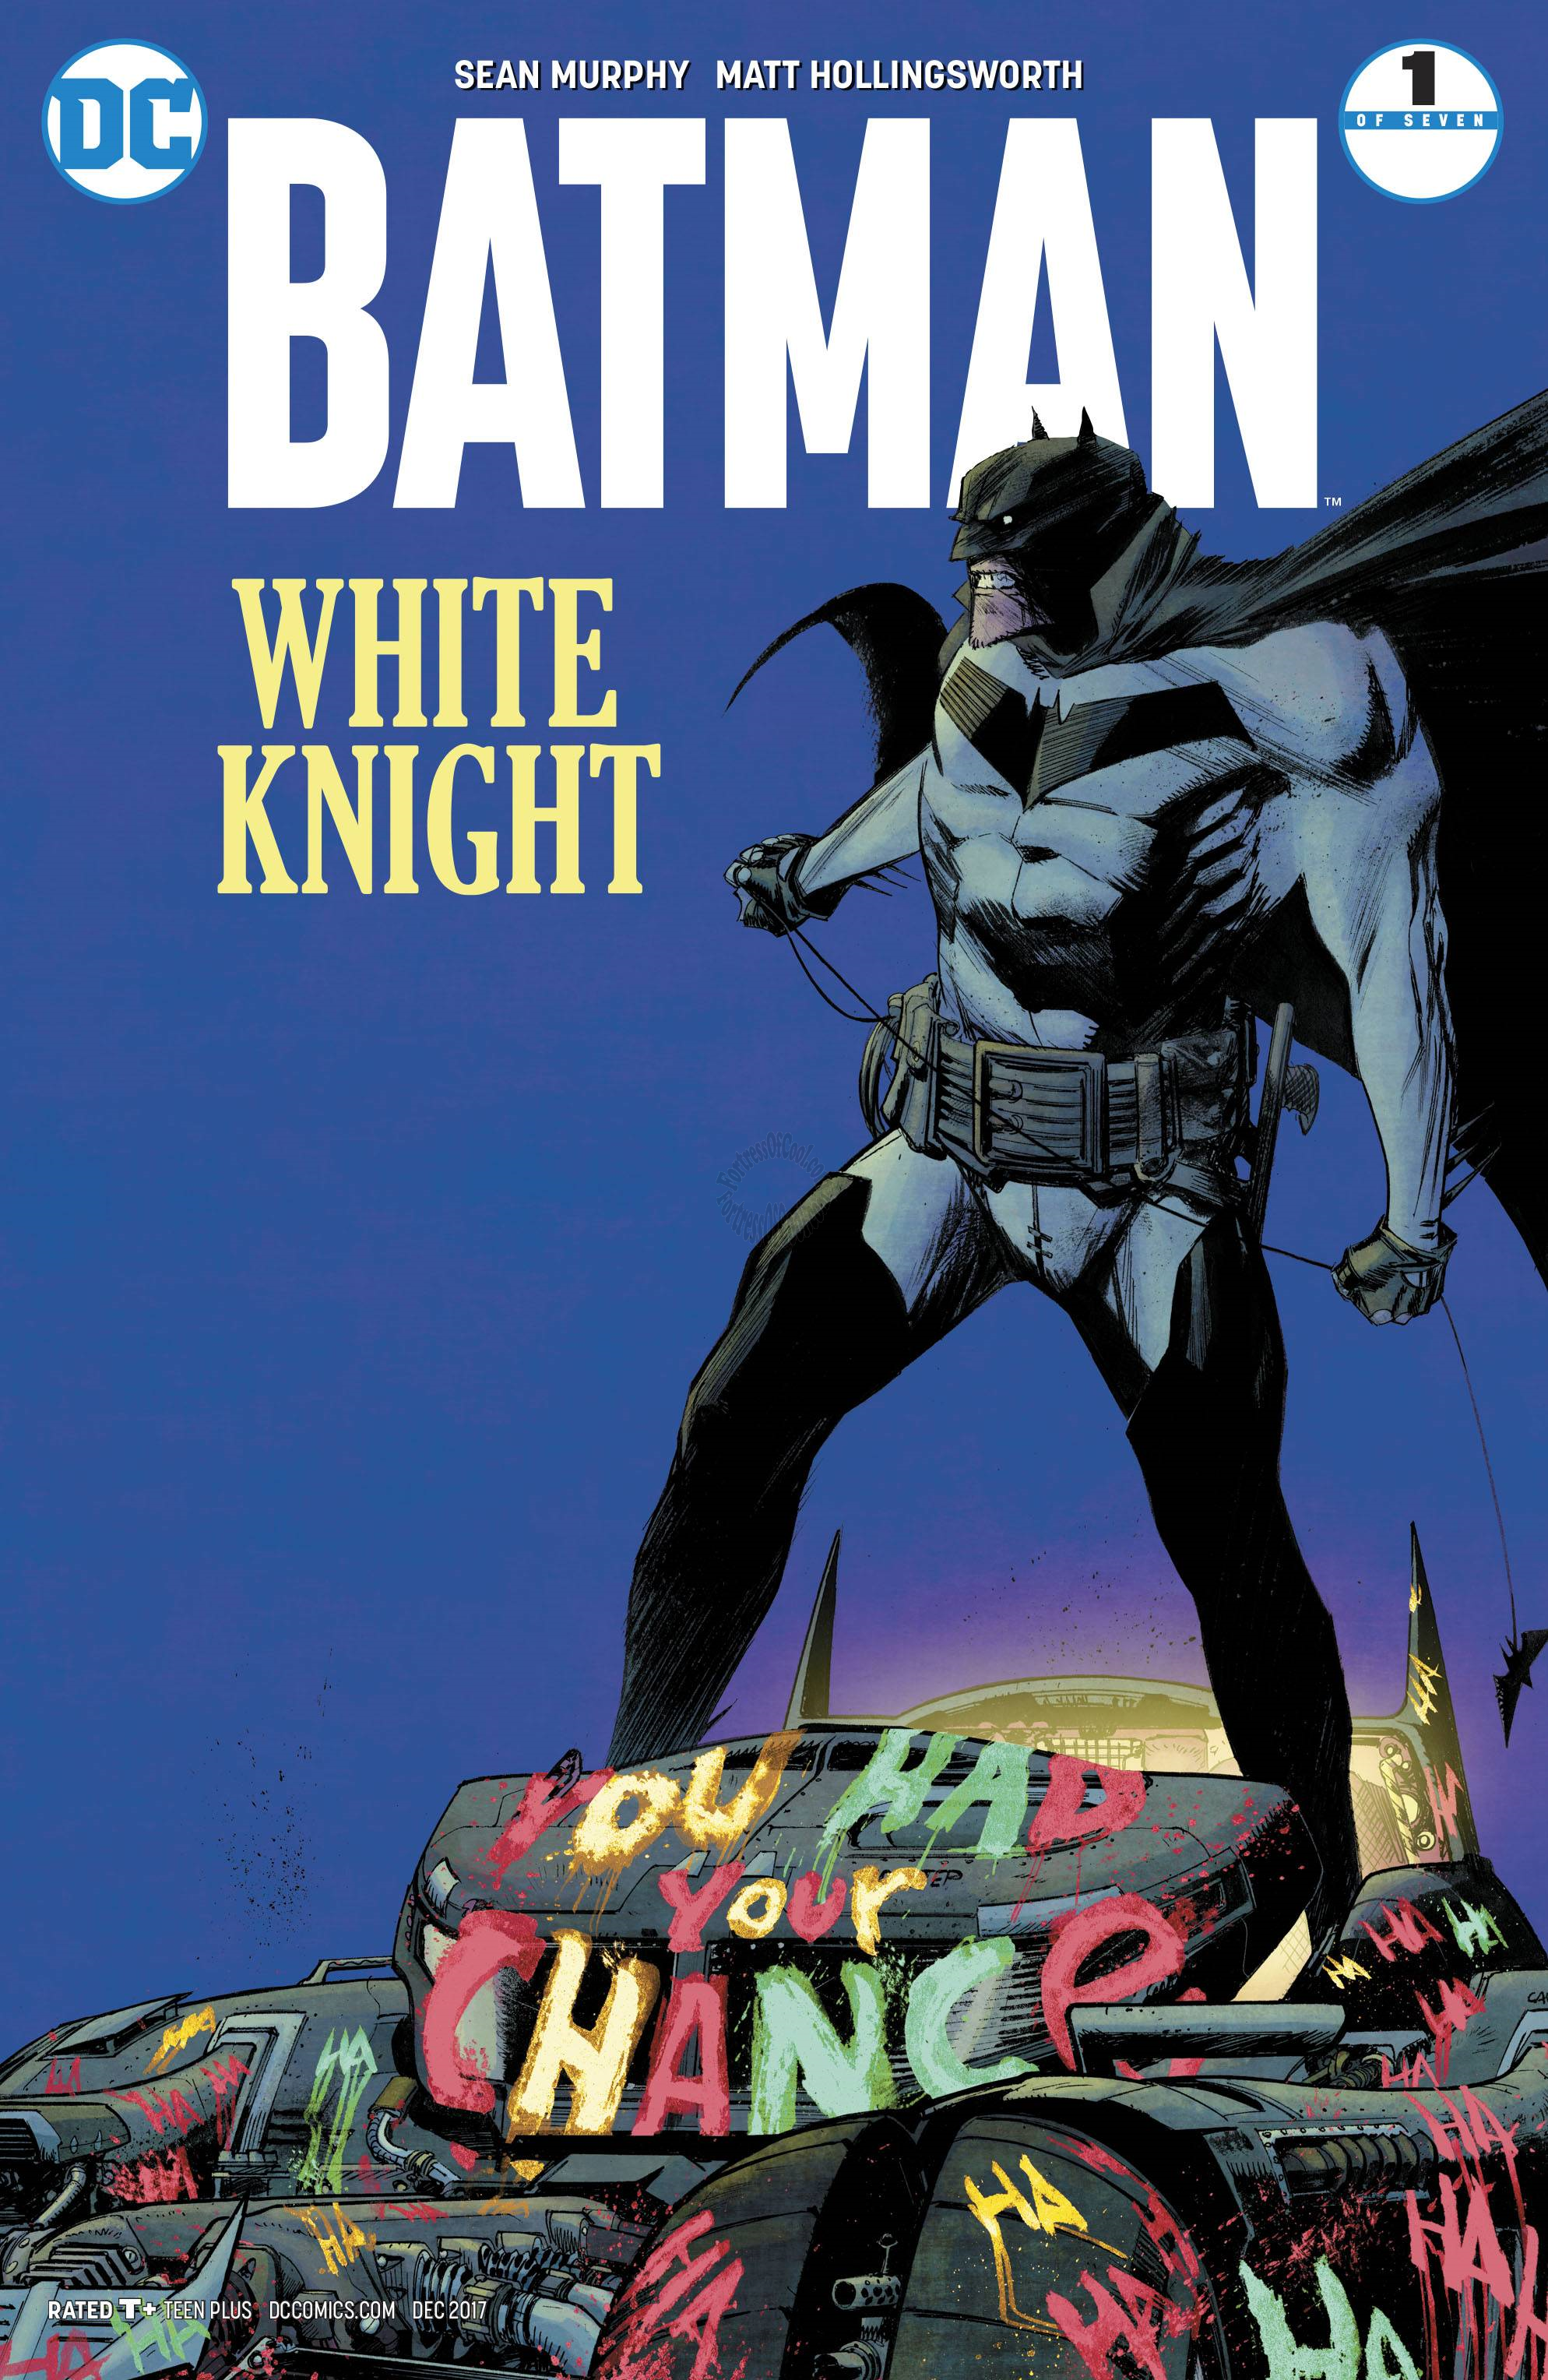 BATMAN WHITE KNIGHT #1 (OF 8) VARIANT